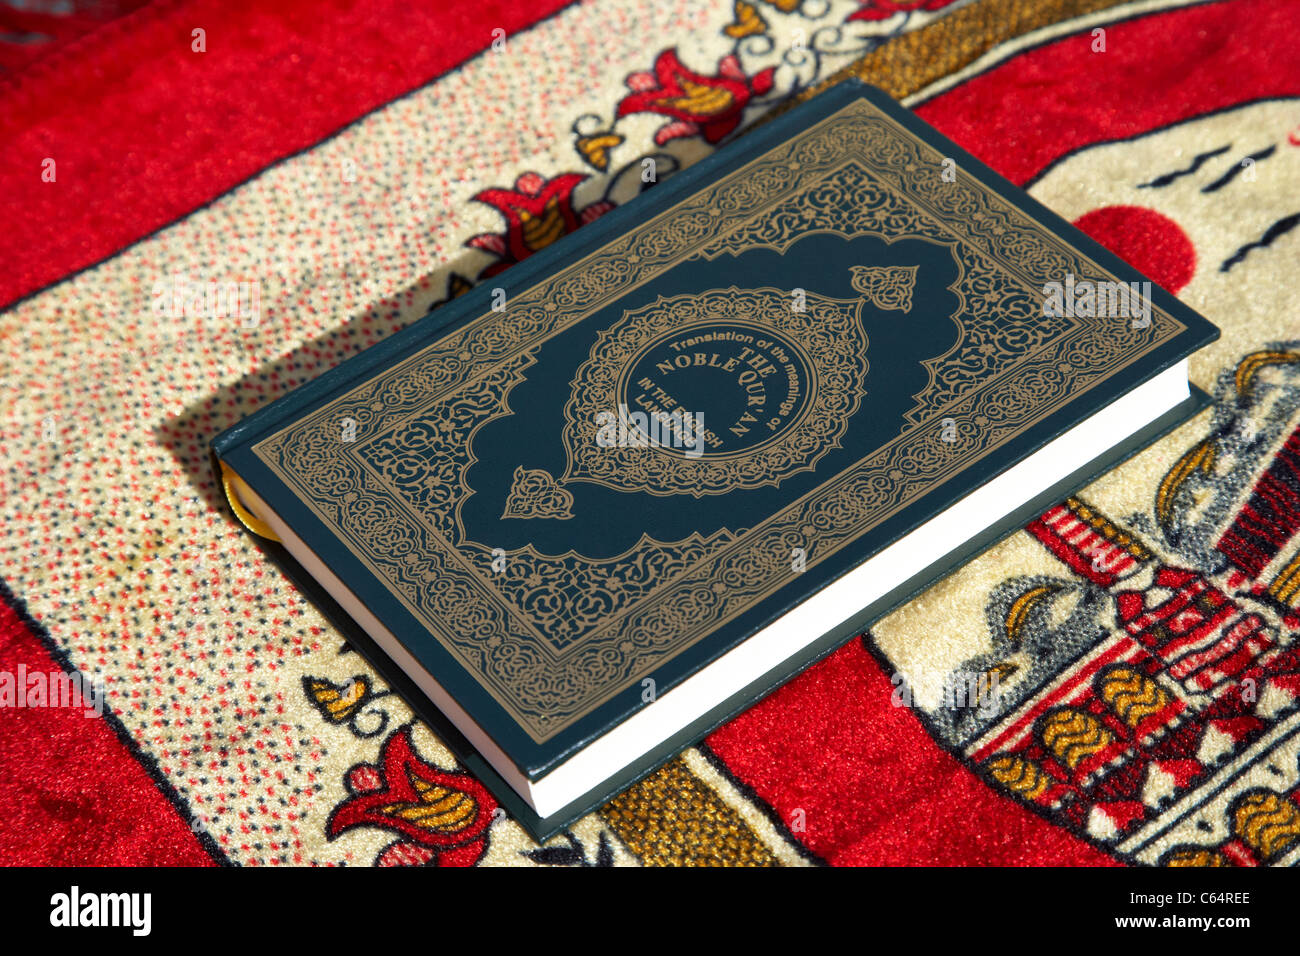 noble holy koran translated english version on a muslim prayer mat Stock Photo